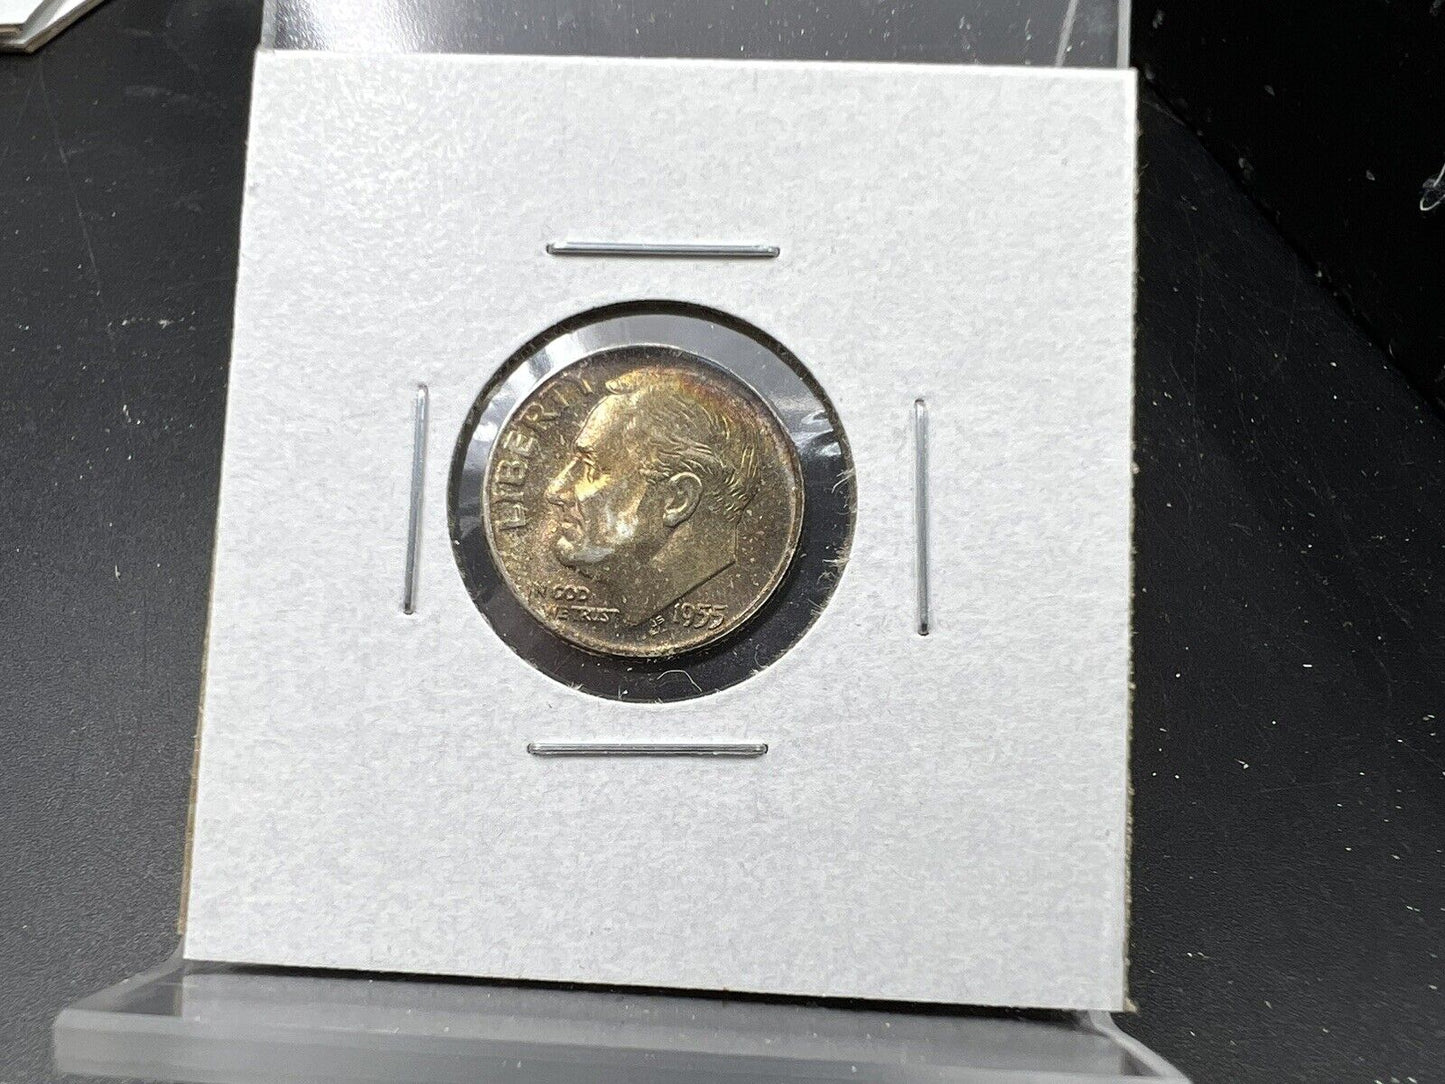 1955 P Roosevelt Silver Dime Coin Nice Toning Toner Rainbow Choice BU UNC NICE